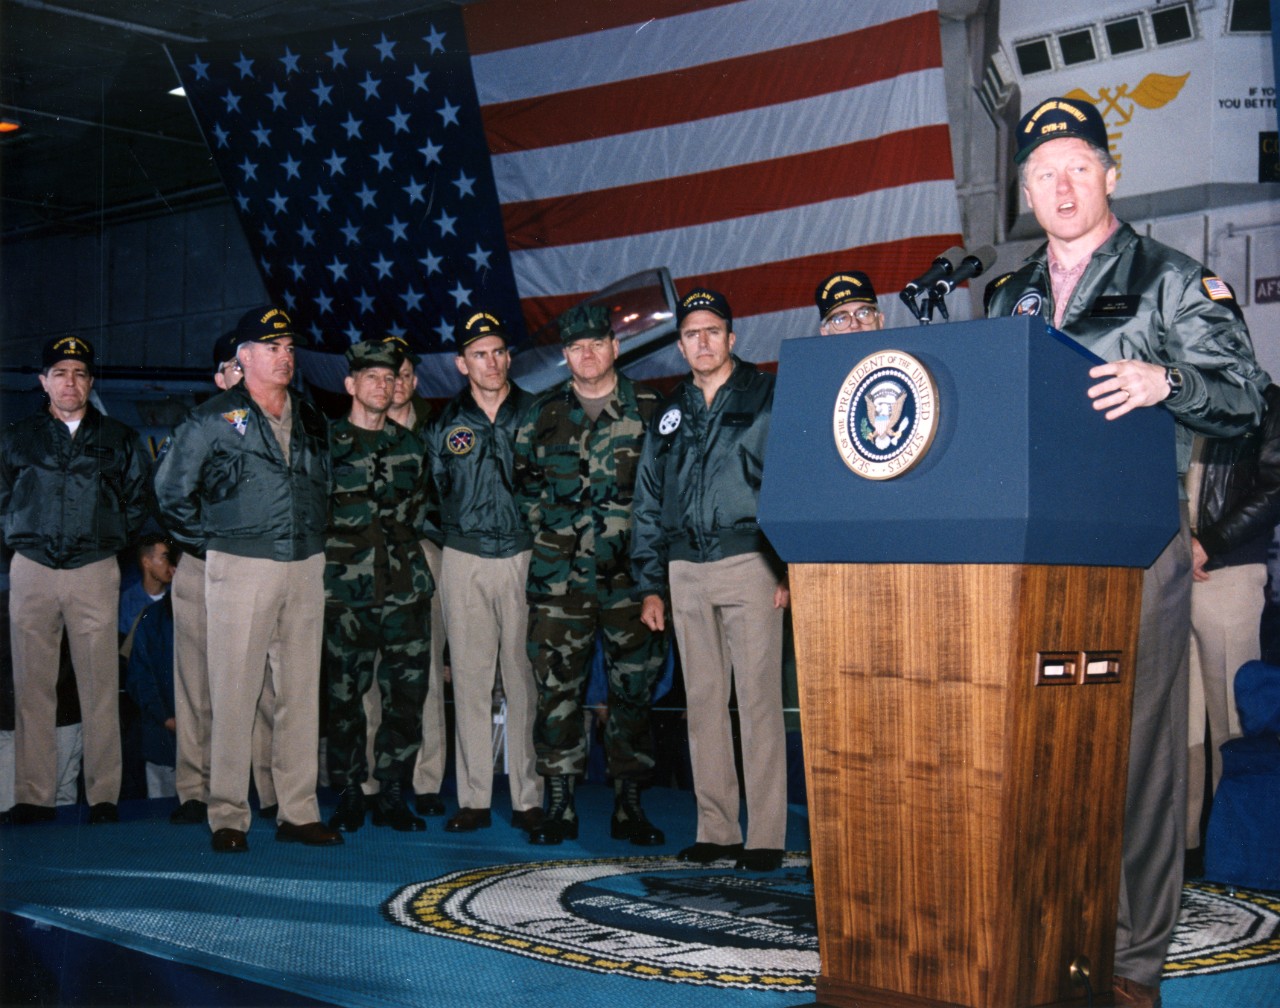 <p>DN-SC-93-03262 President Clinton addressing crew of USS Theodore Roosevelt (CVN 71)</p><div style="left: -10000px; top: 0px; width: 9000px; height: 16px; overflow: hidden; position: absolute;"><div>&nbsp;</div></div>